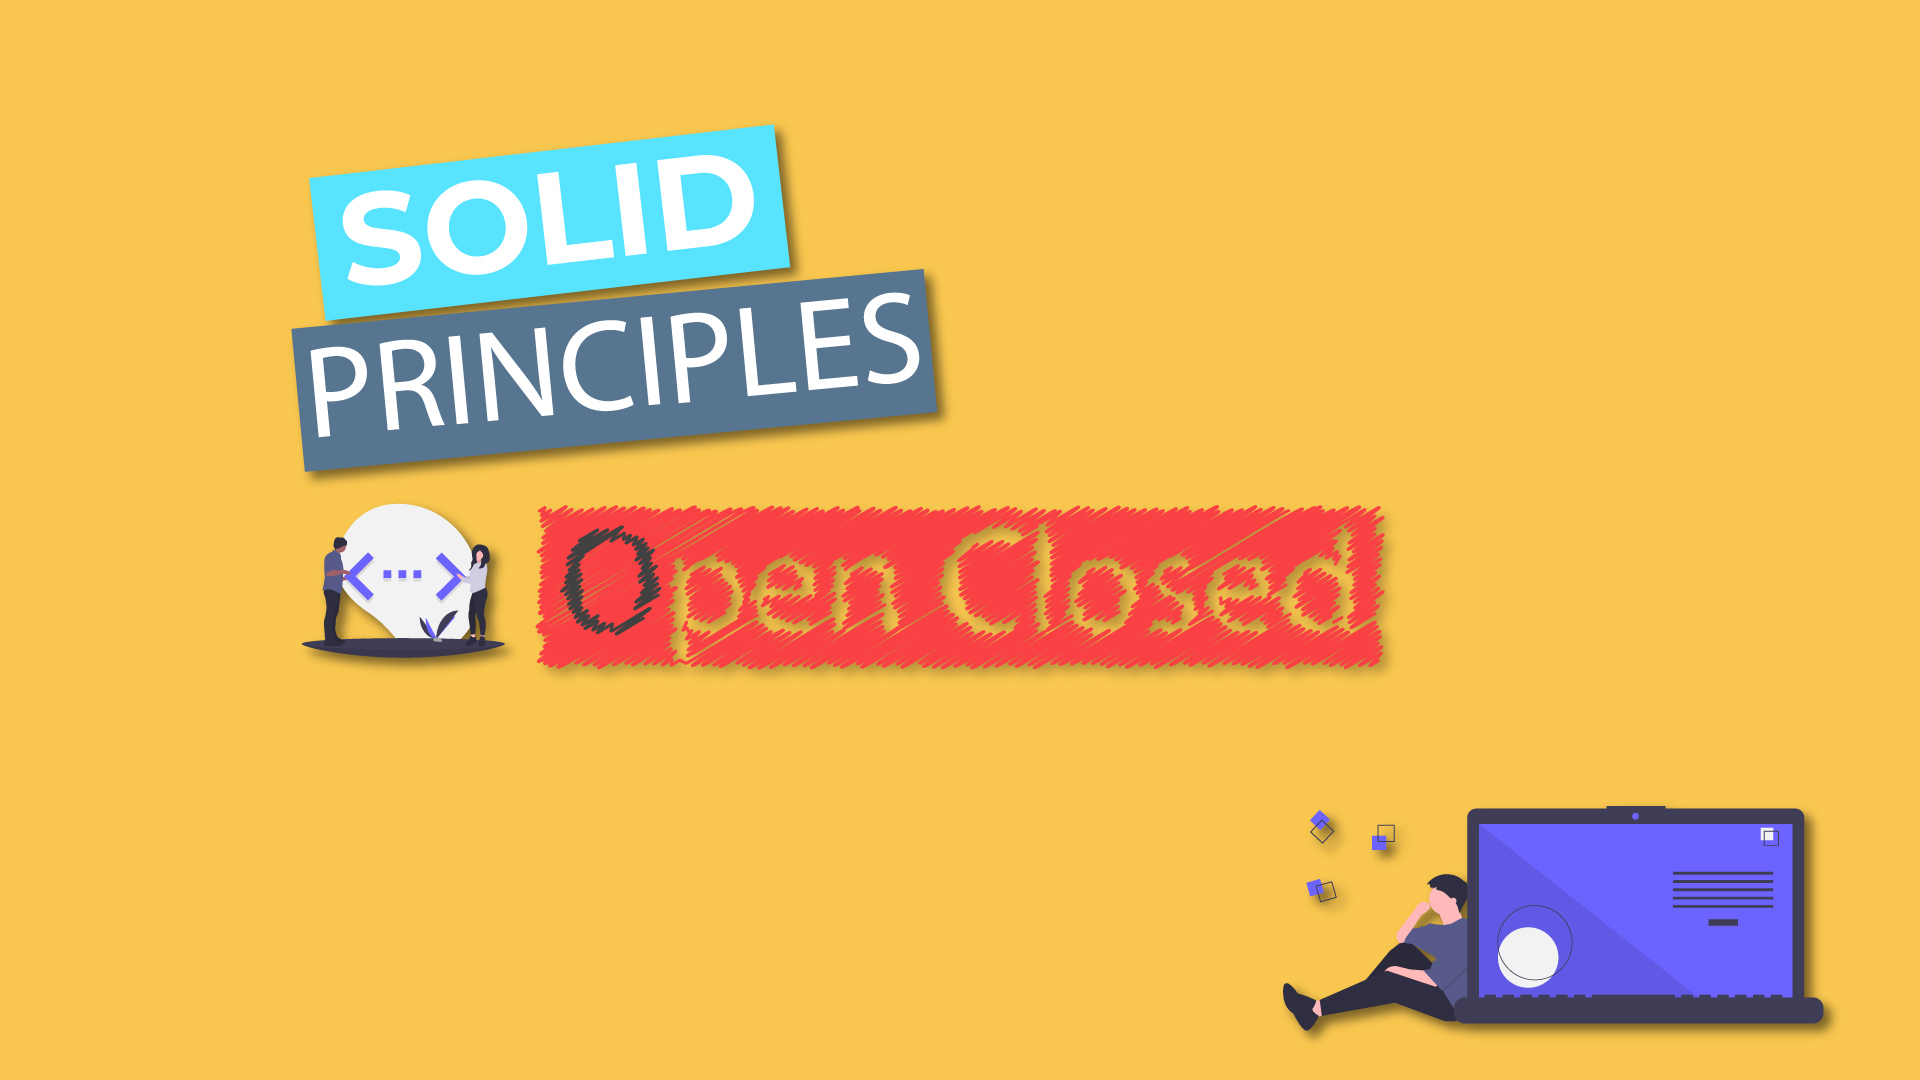 Open Closed Principle